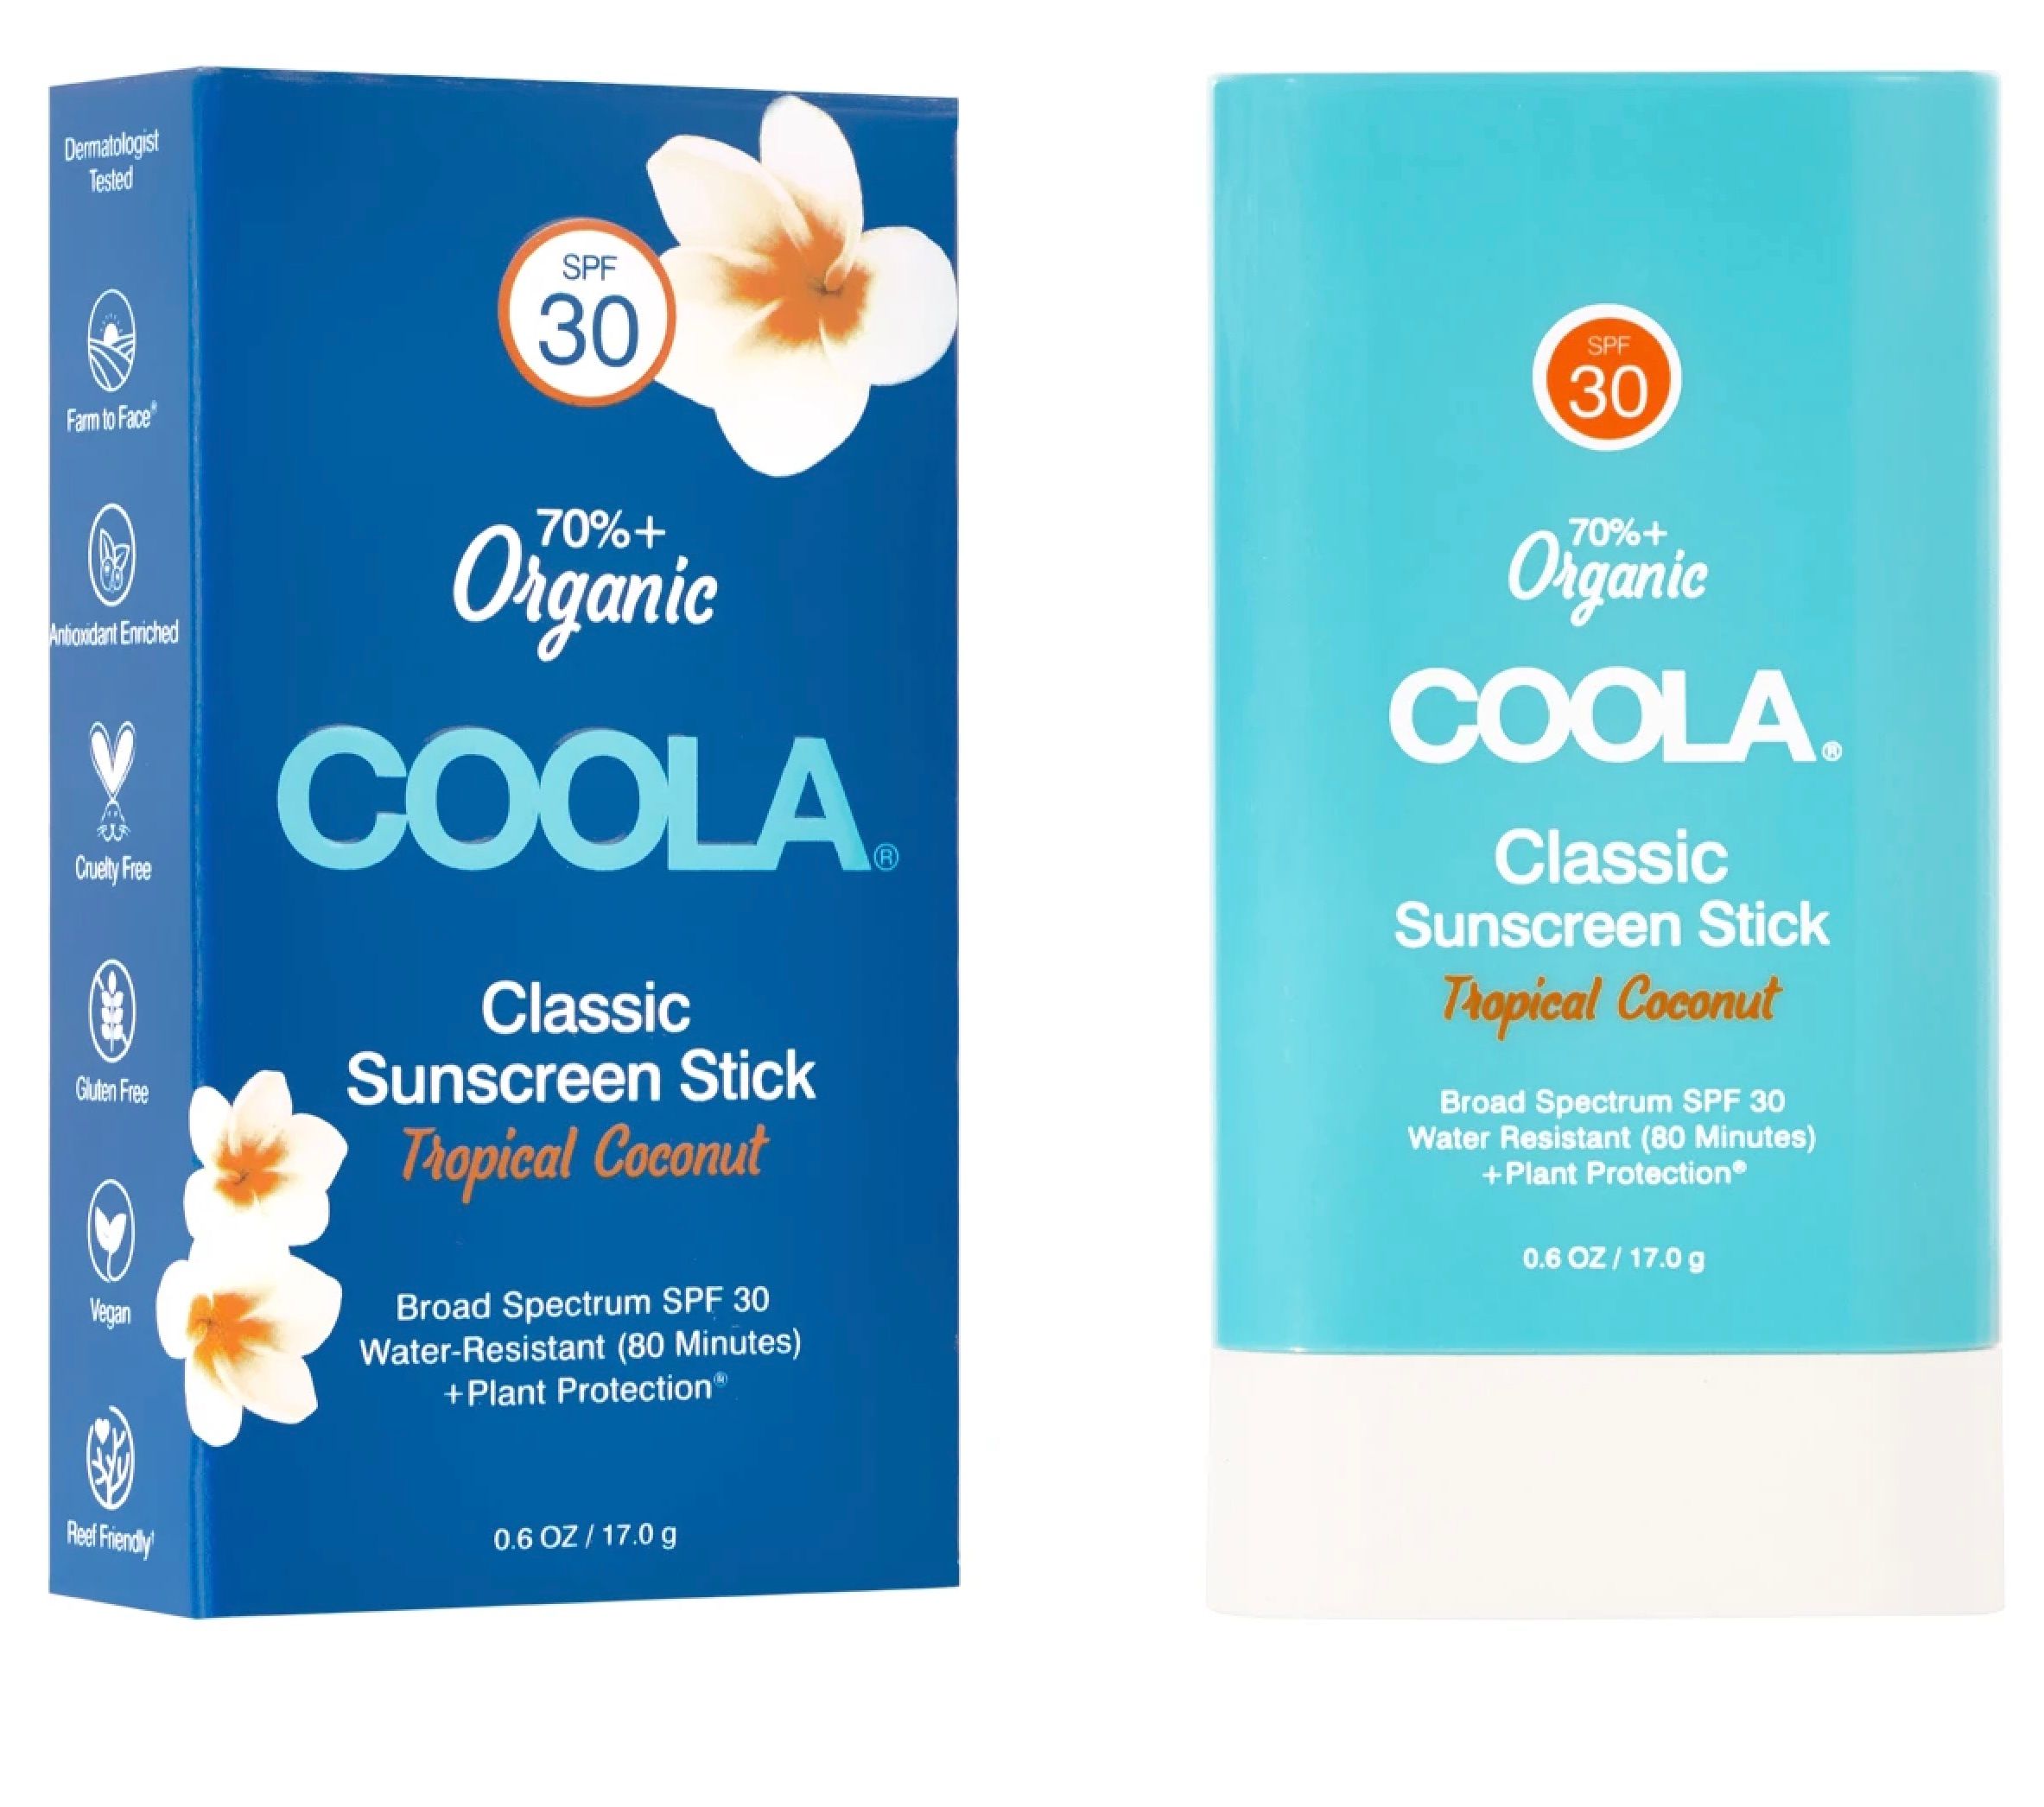 COOLA Classic Organic Sunscreen Stick, Tropical Coconut, SPF 30 - .75 fl oz